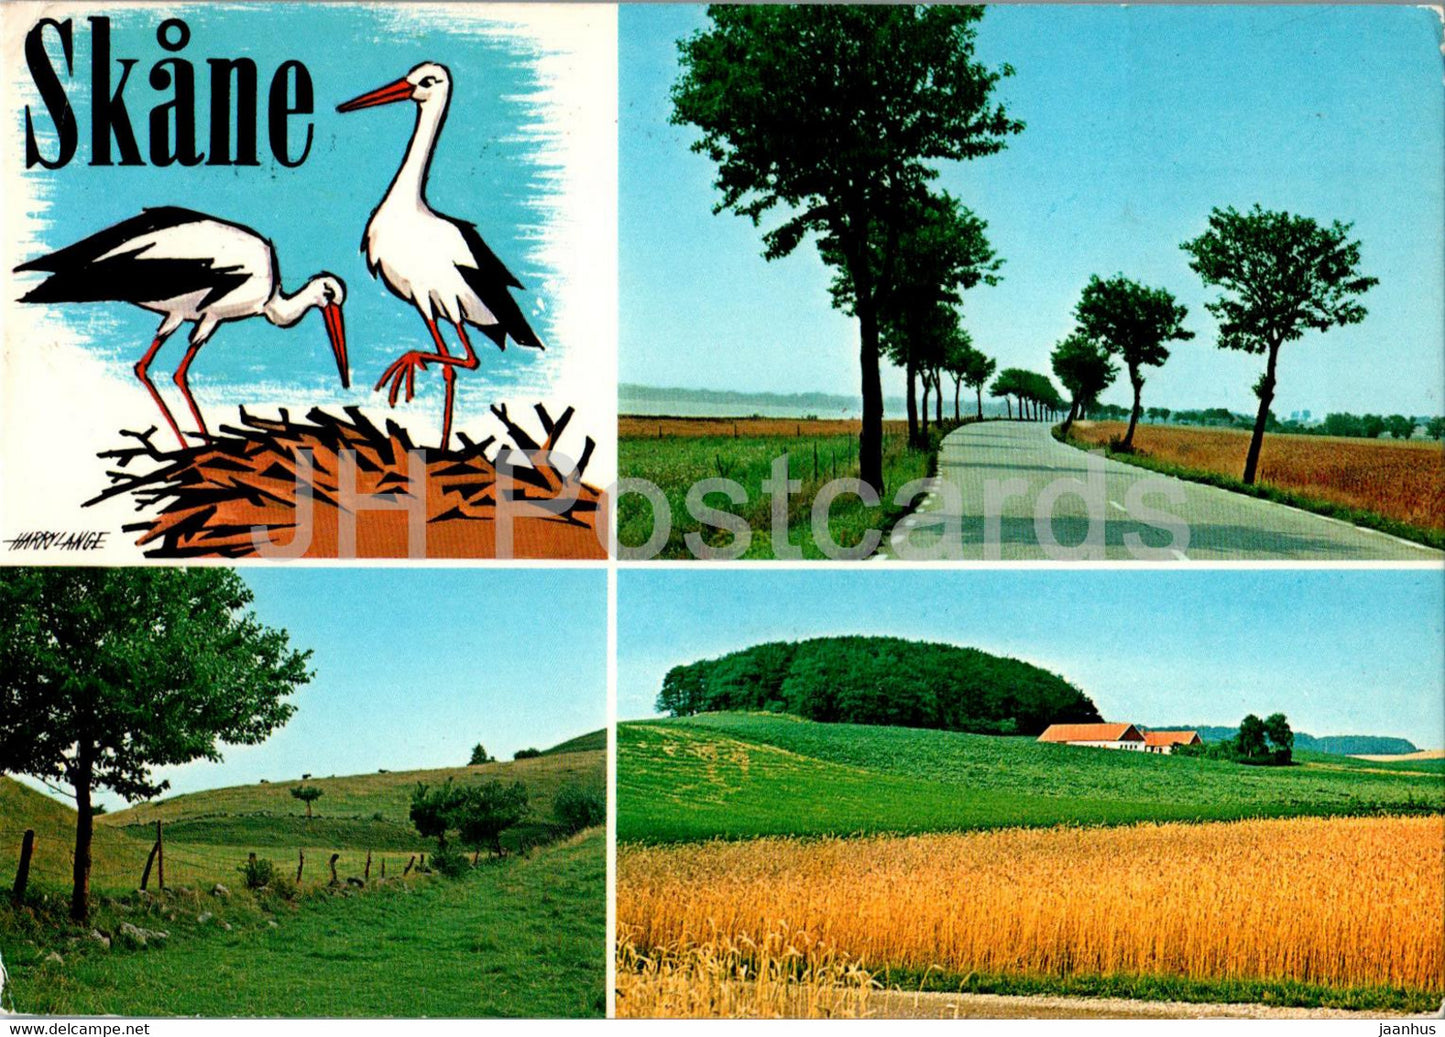 Skane - stork - birds - multiview - 1976 - Sweden - used - JH Postcards